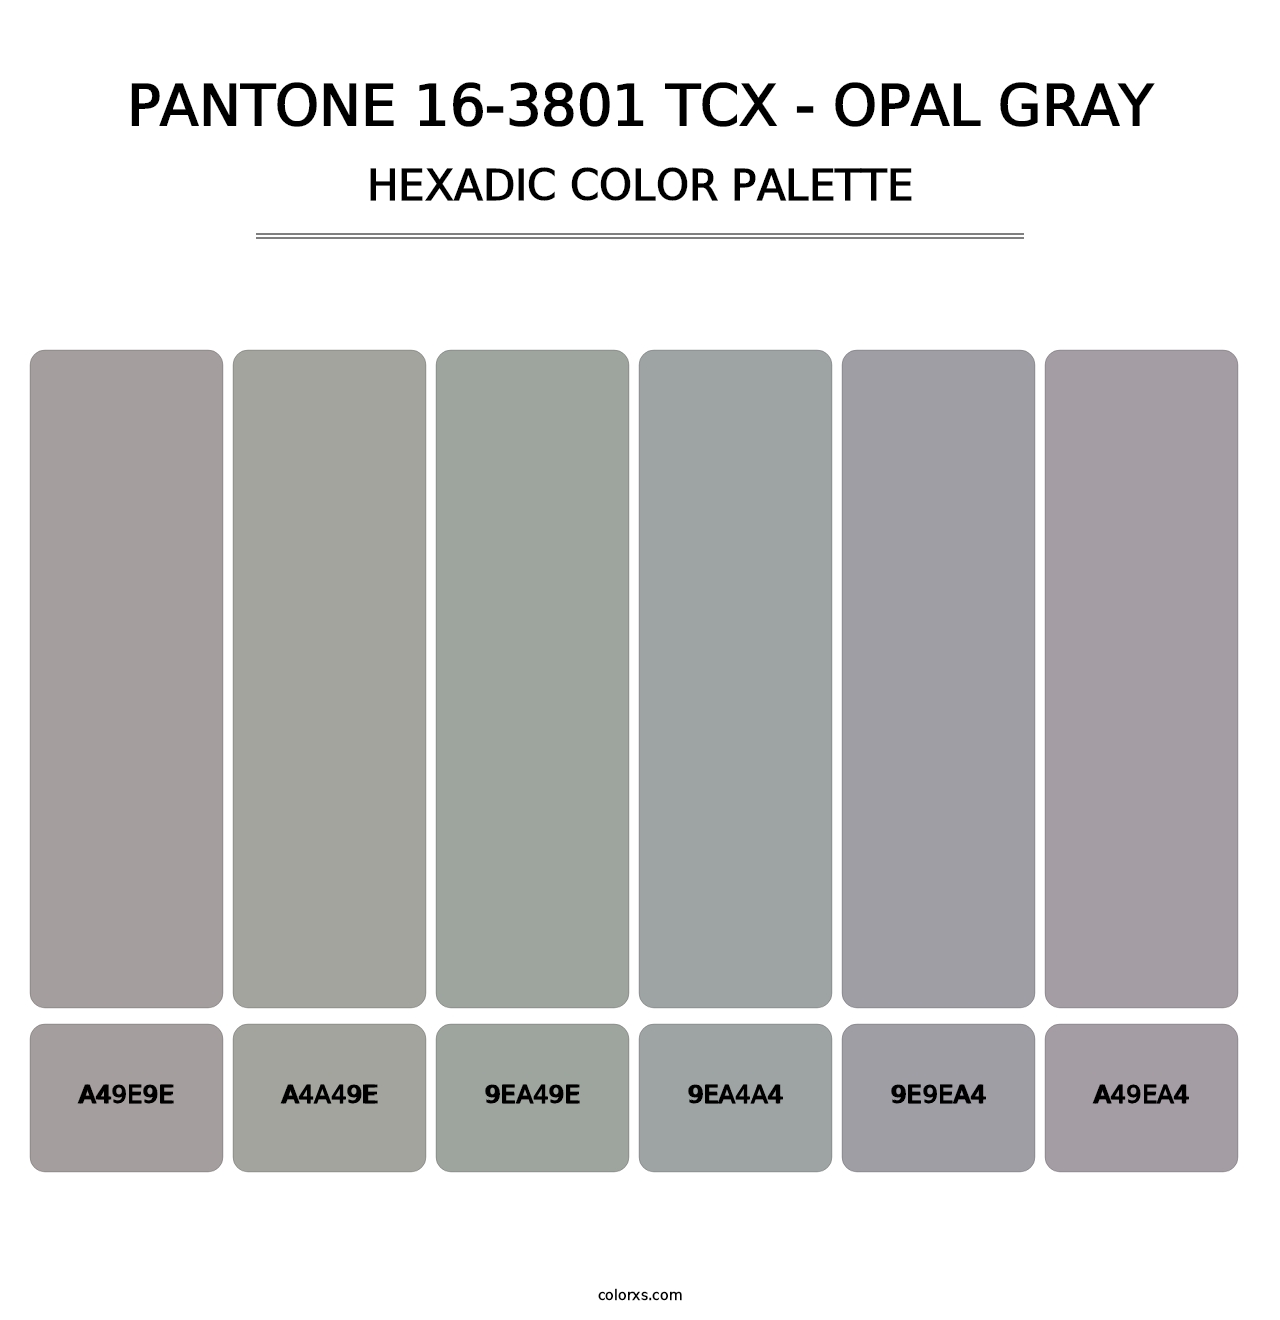 PANTONE 16-3801 TCX - Opal Gray - Hexadic Color Palette